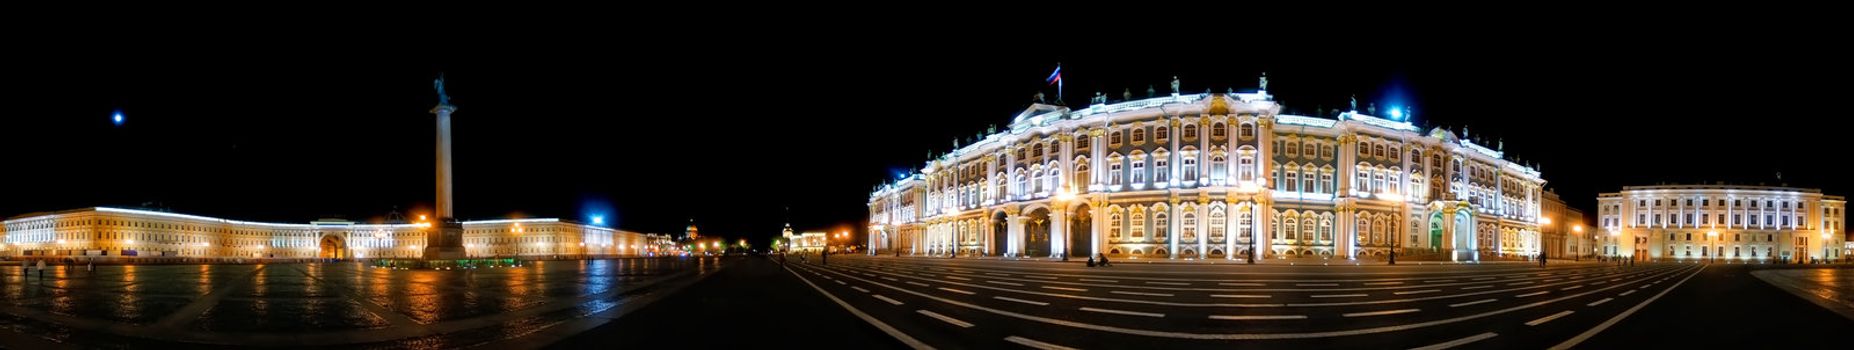 Night panoramic photo of Palace Square in Saint Petersburg, Russia